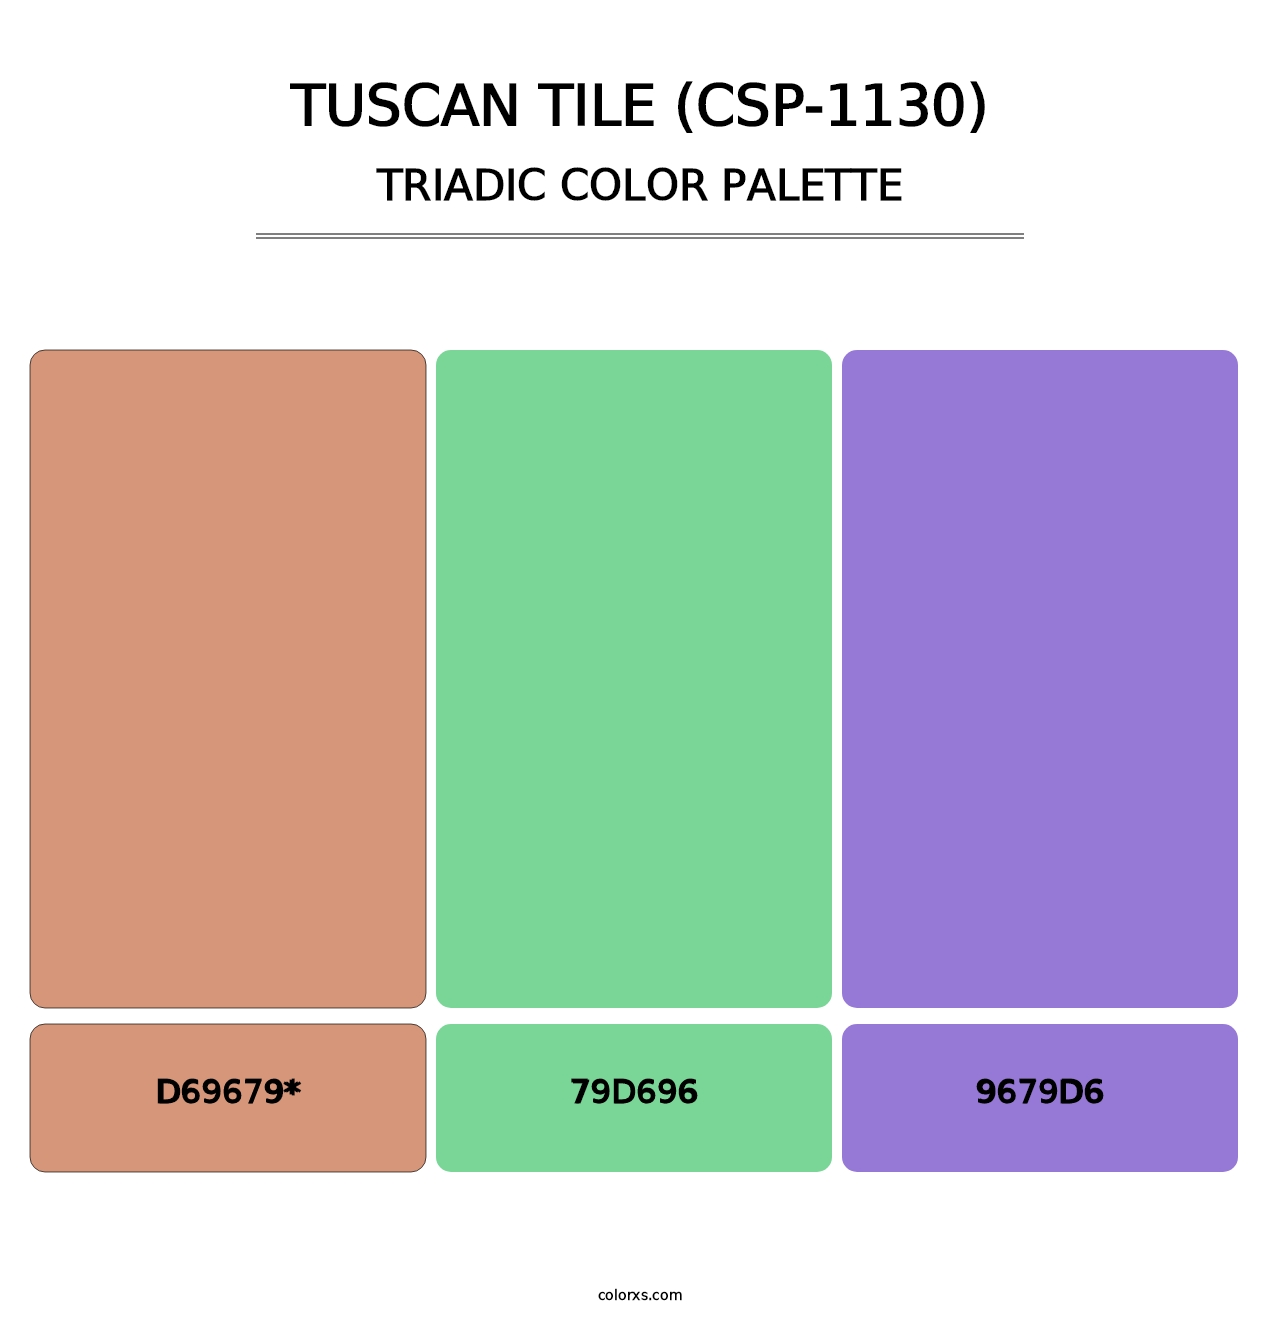 Tuscan Tile (CSP-1130) - Triadic Color Palette